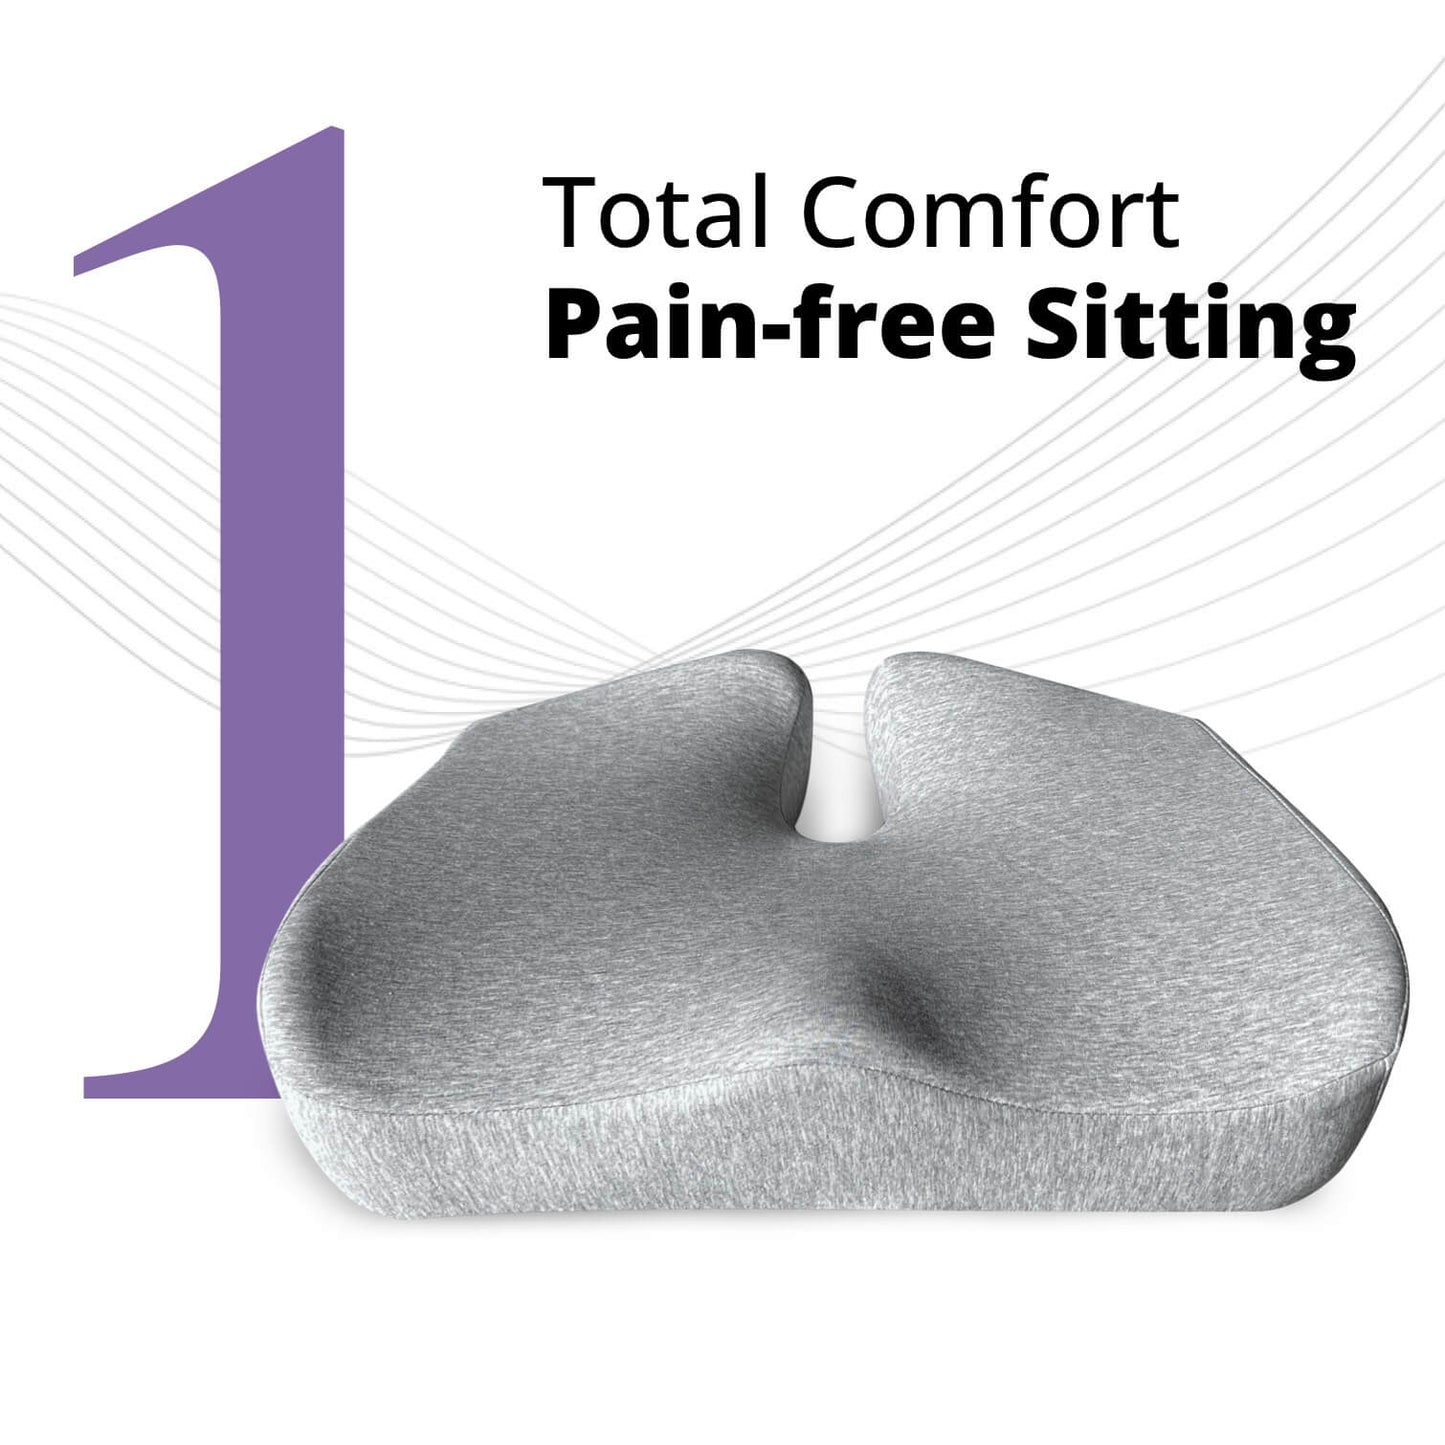 Pressure Cushions - Buy Pressure Seat Cushions for Maximum Comfort